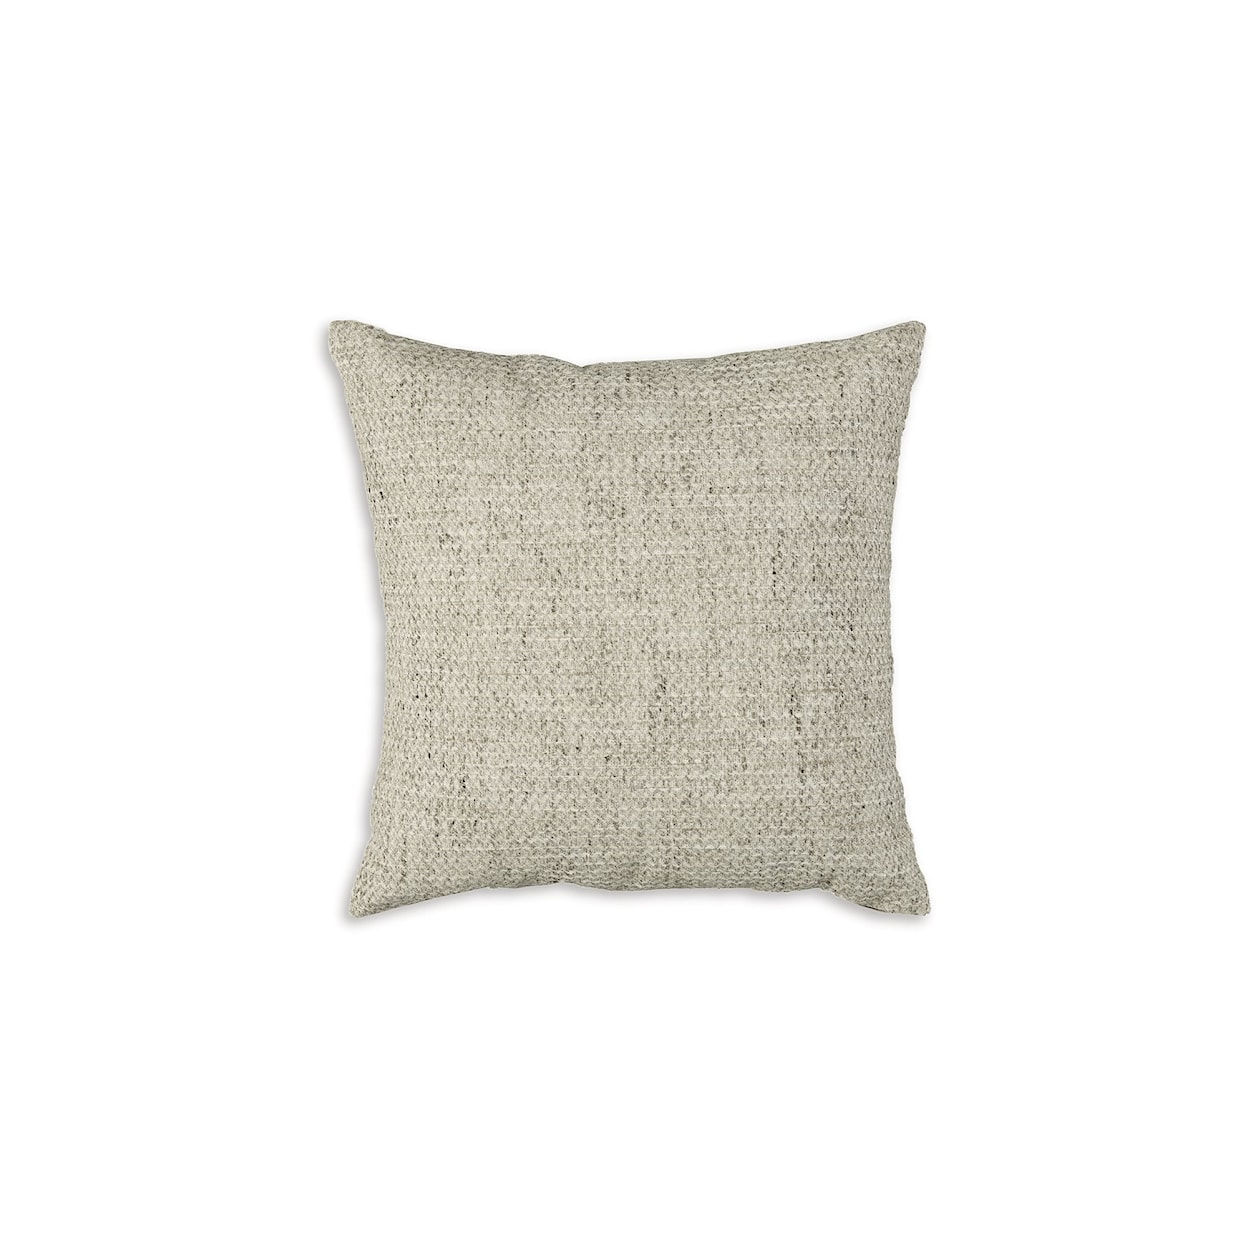 Benchcraft Erline Pillow (Set of 4)